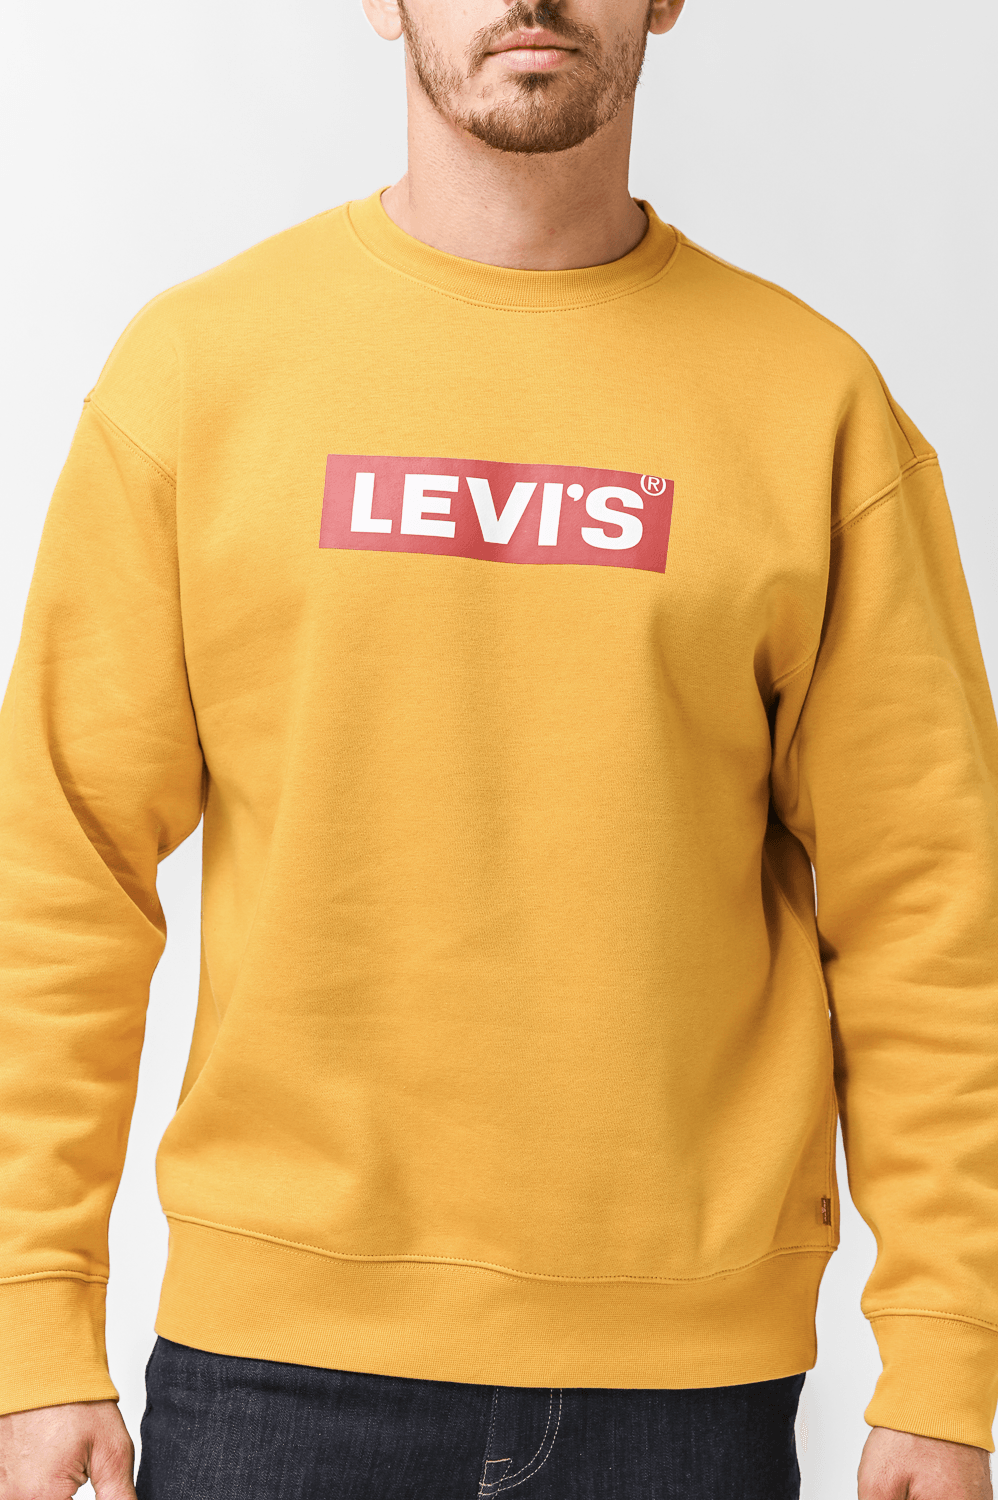 LEVI'S - סווטשירט RELAXD GRAPHIC צבע צהוב - MASHBIR//365